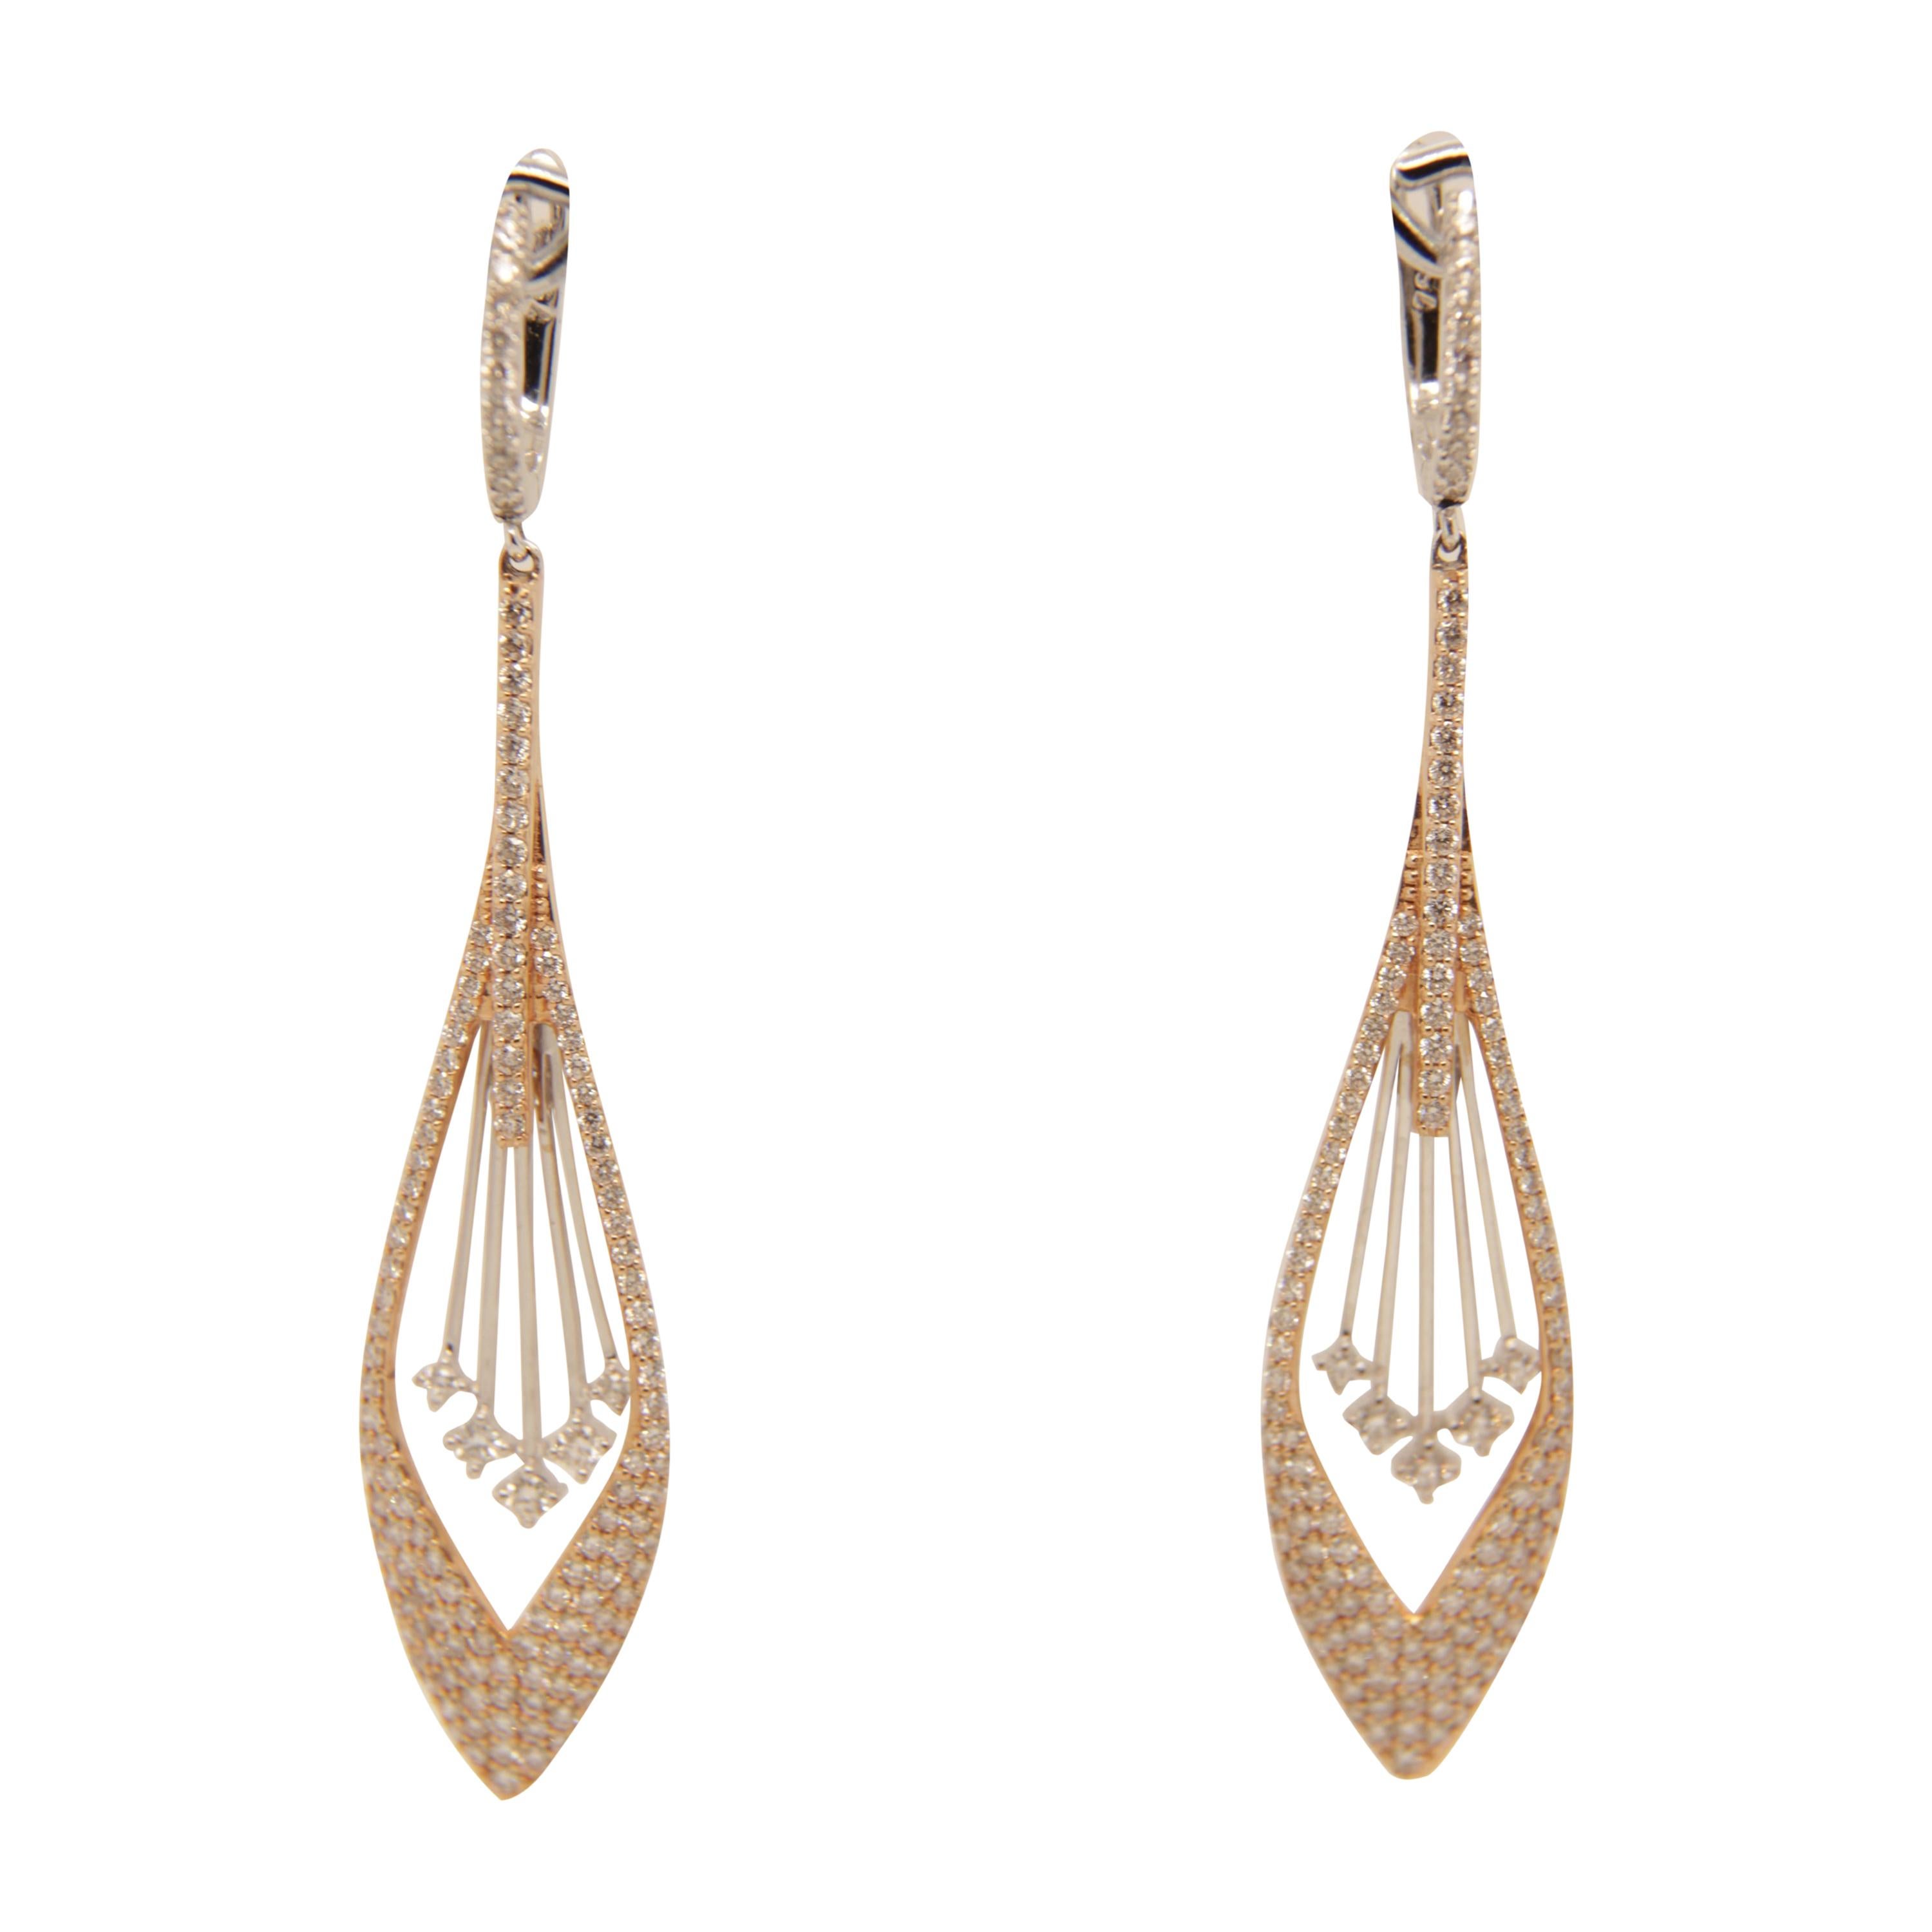 1.96 Carat Diamond Earring in 18 Karat Gold